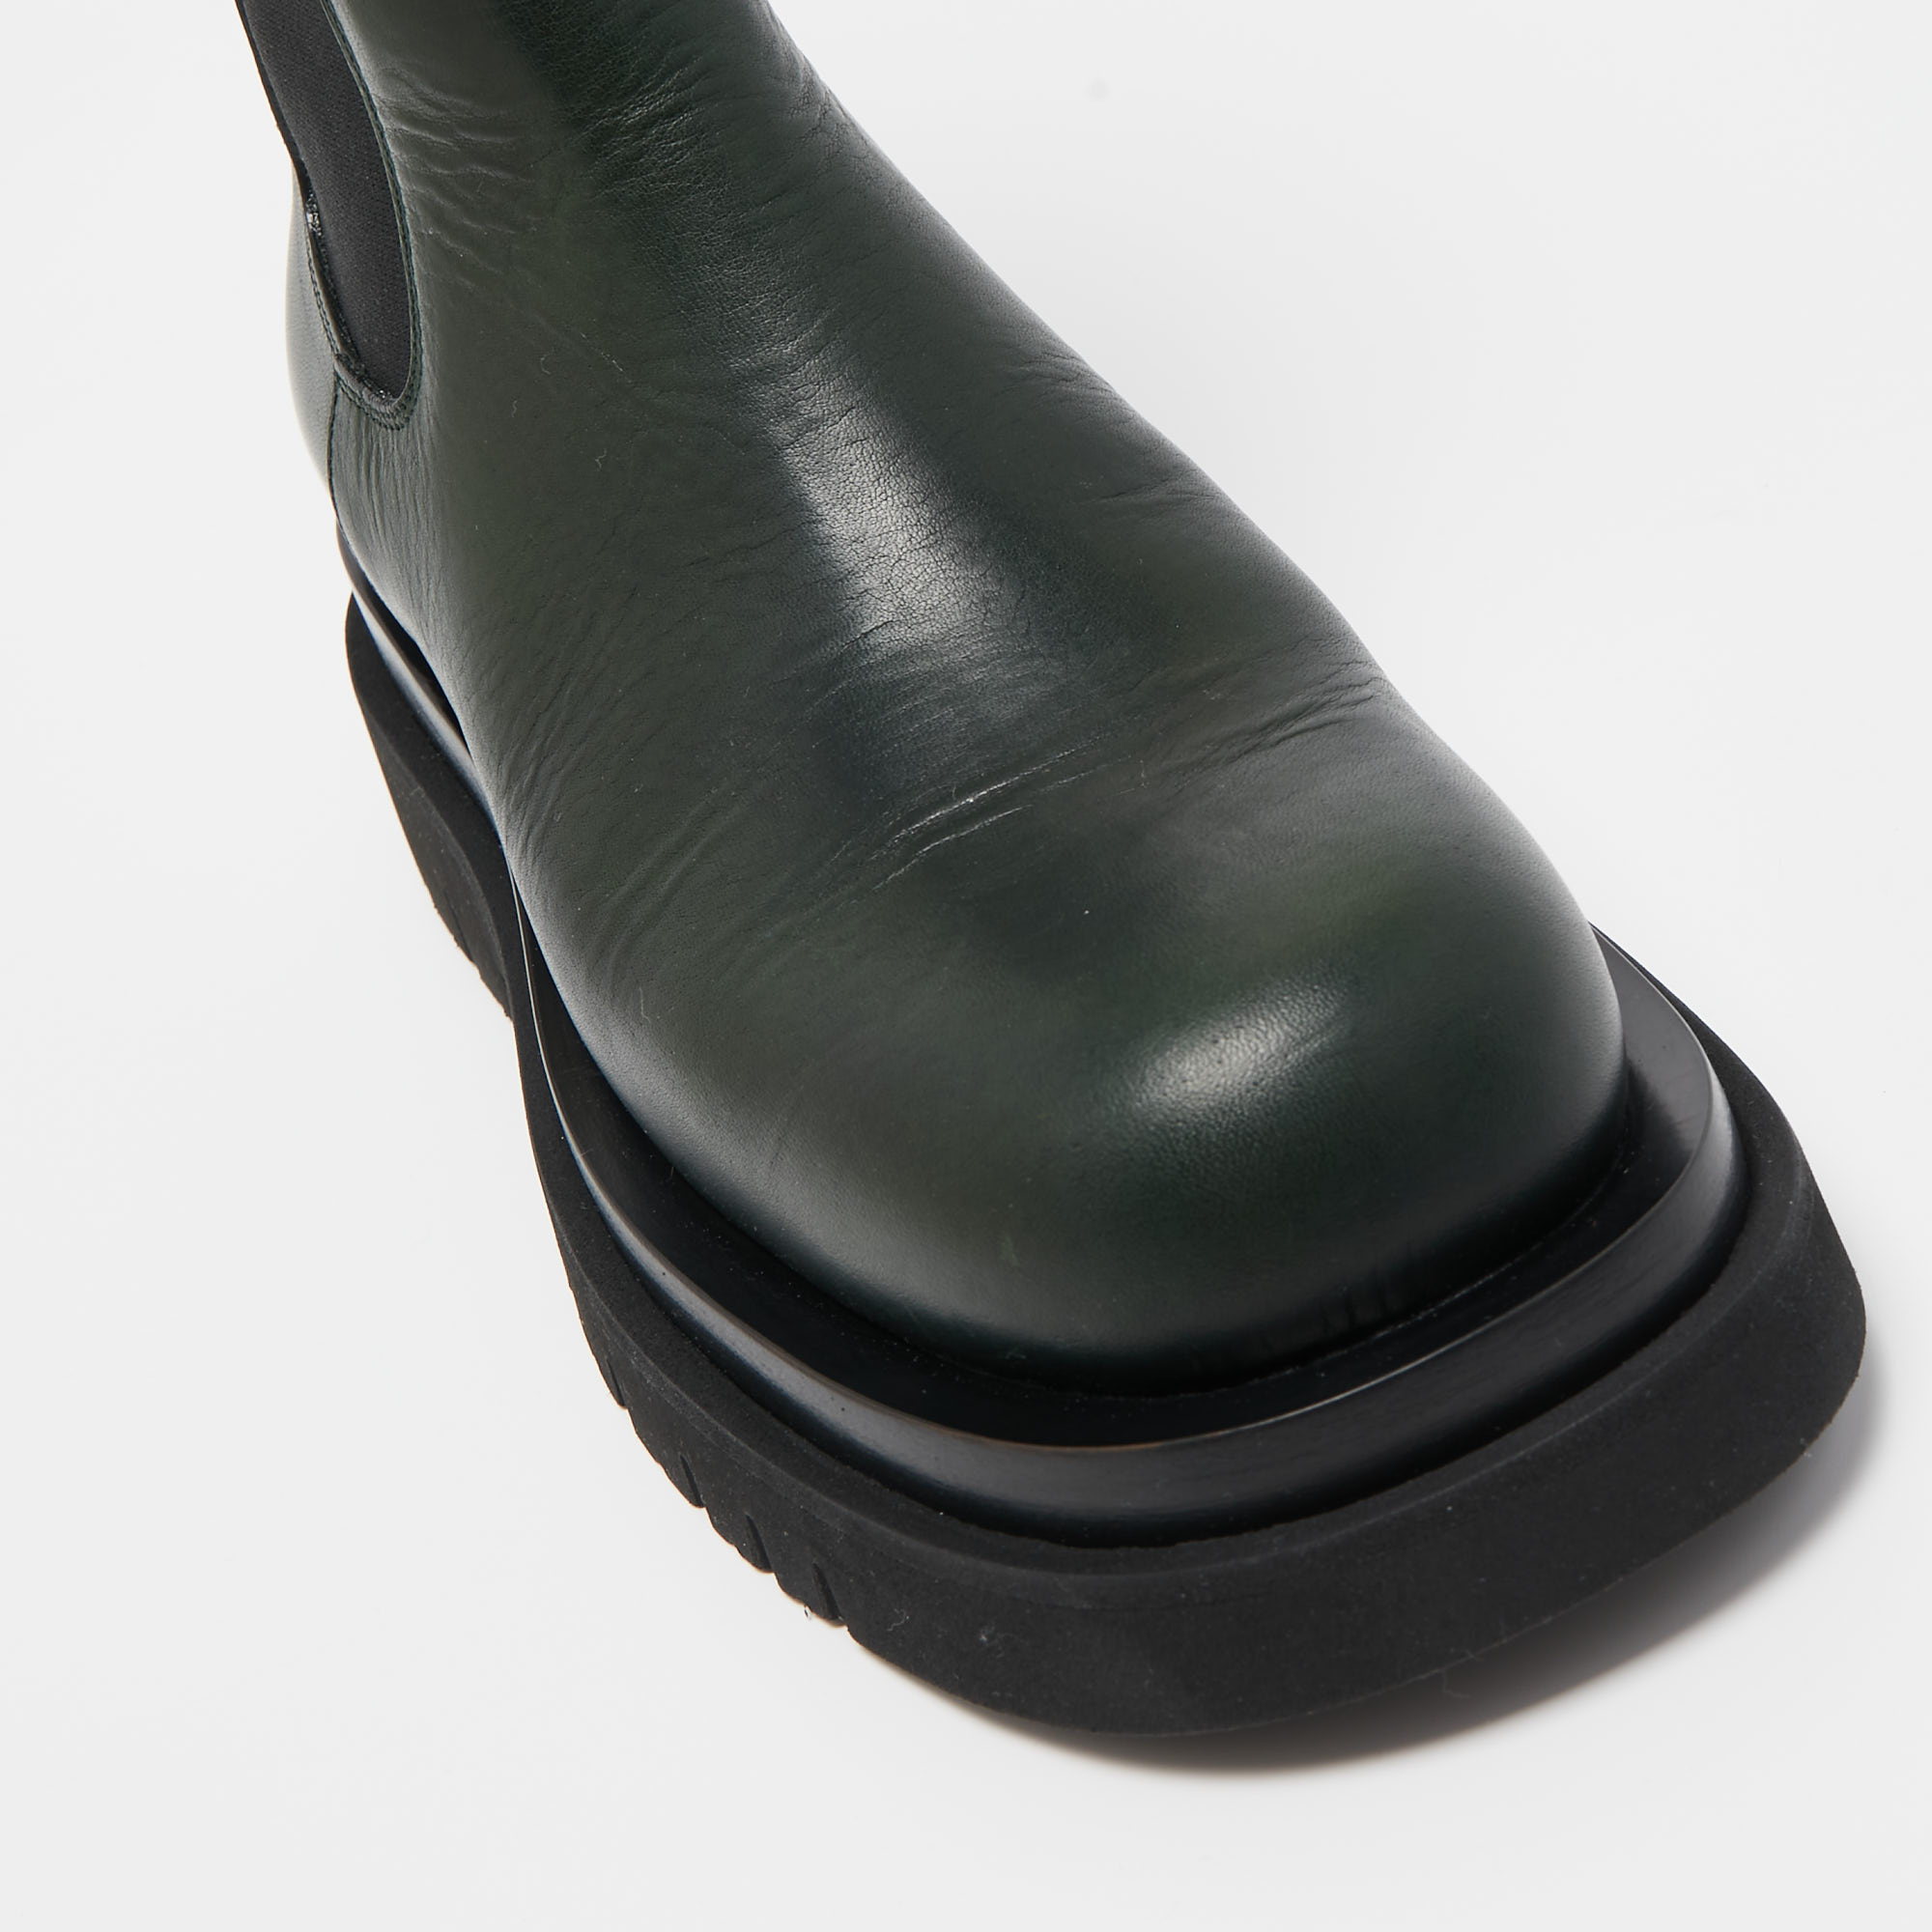 Bottega Veneta Green Leather Chelsea Lug Mid Calf Boots Size 39